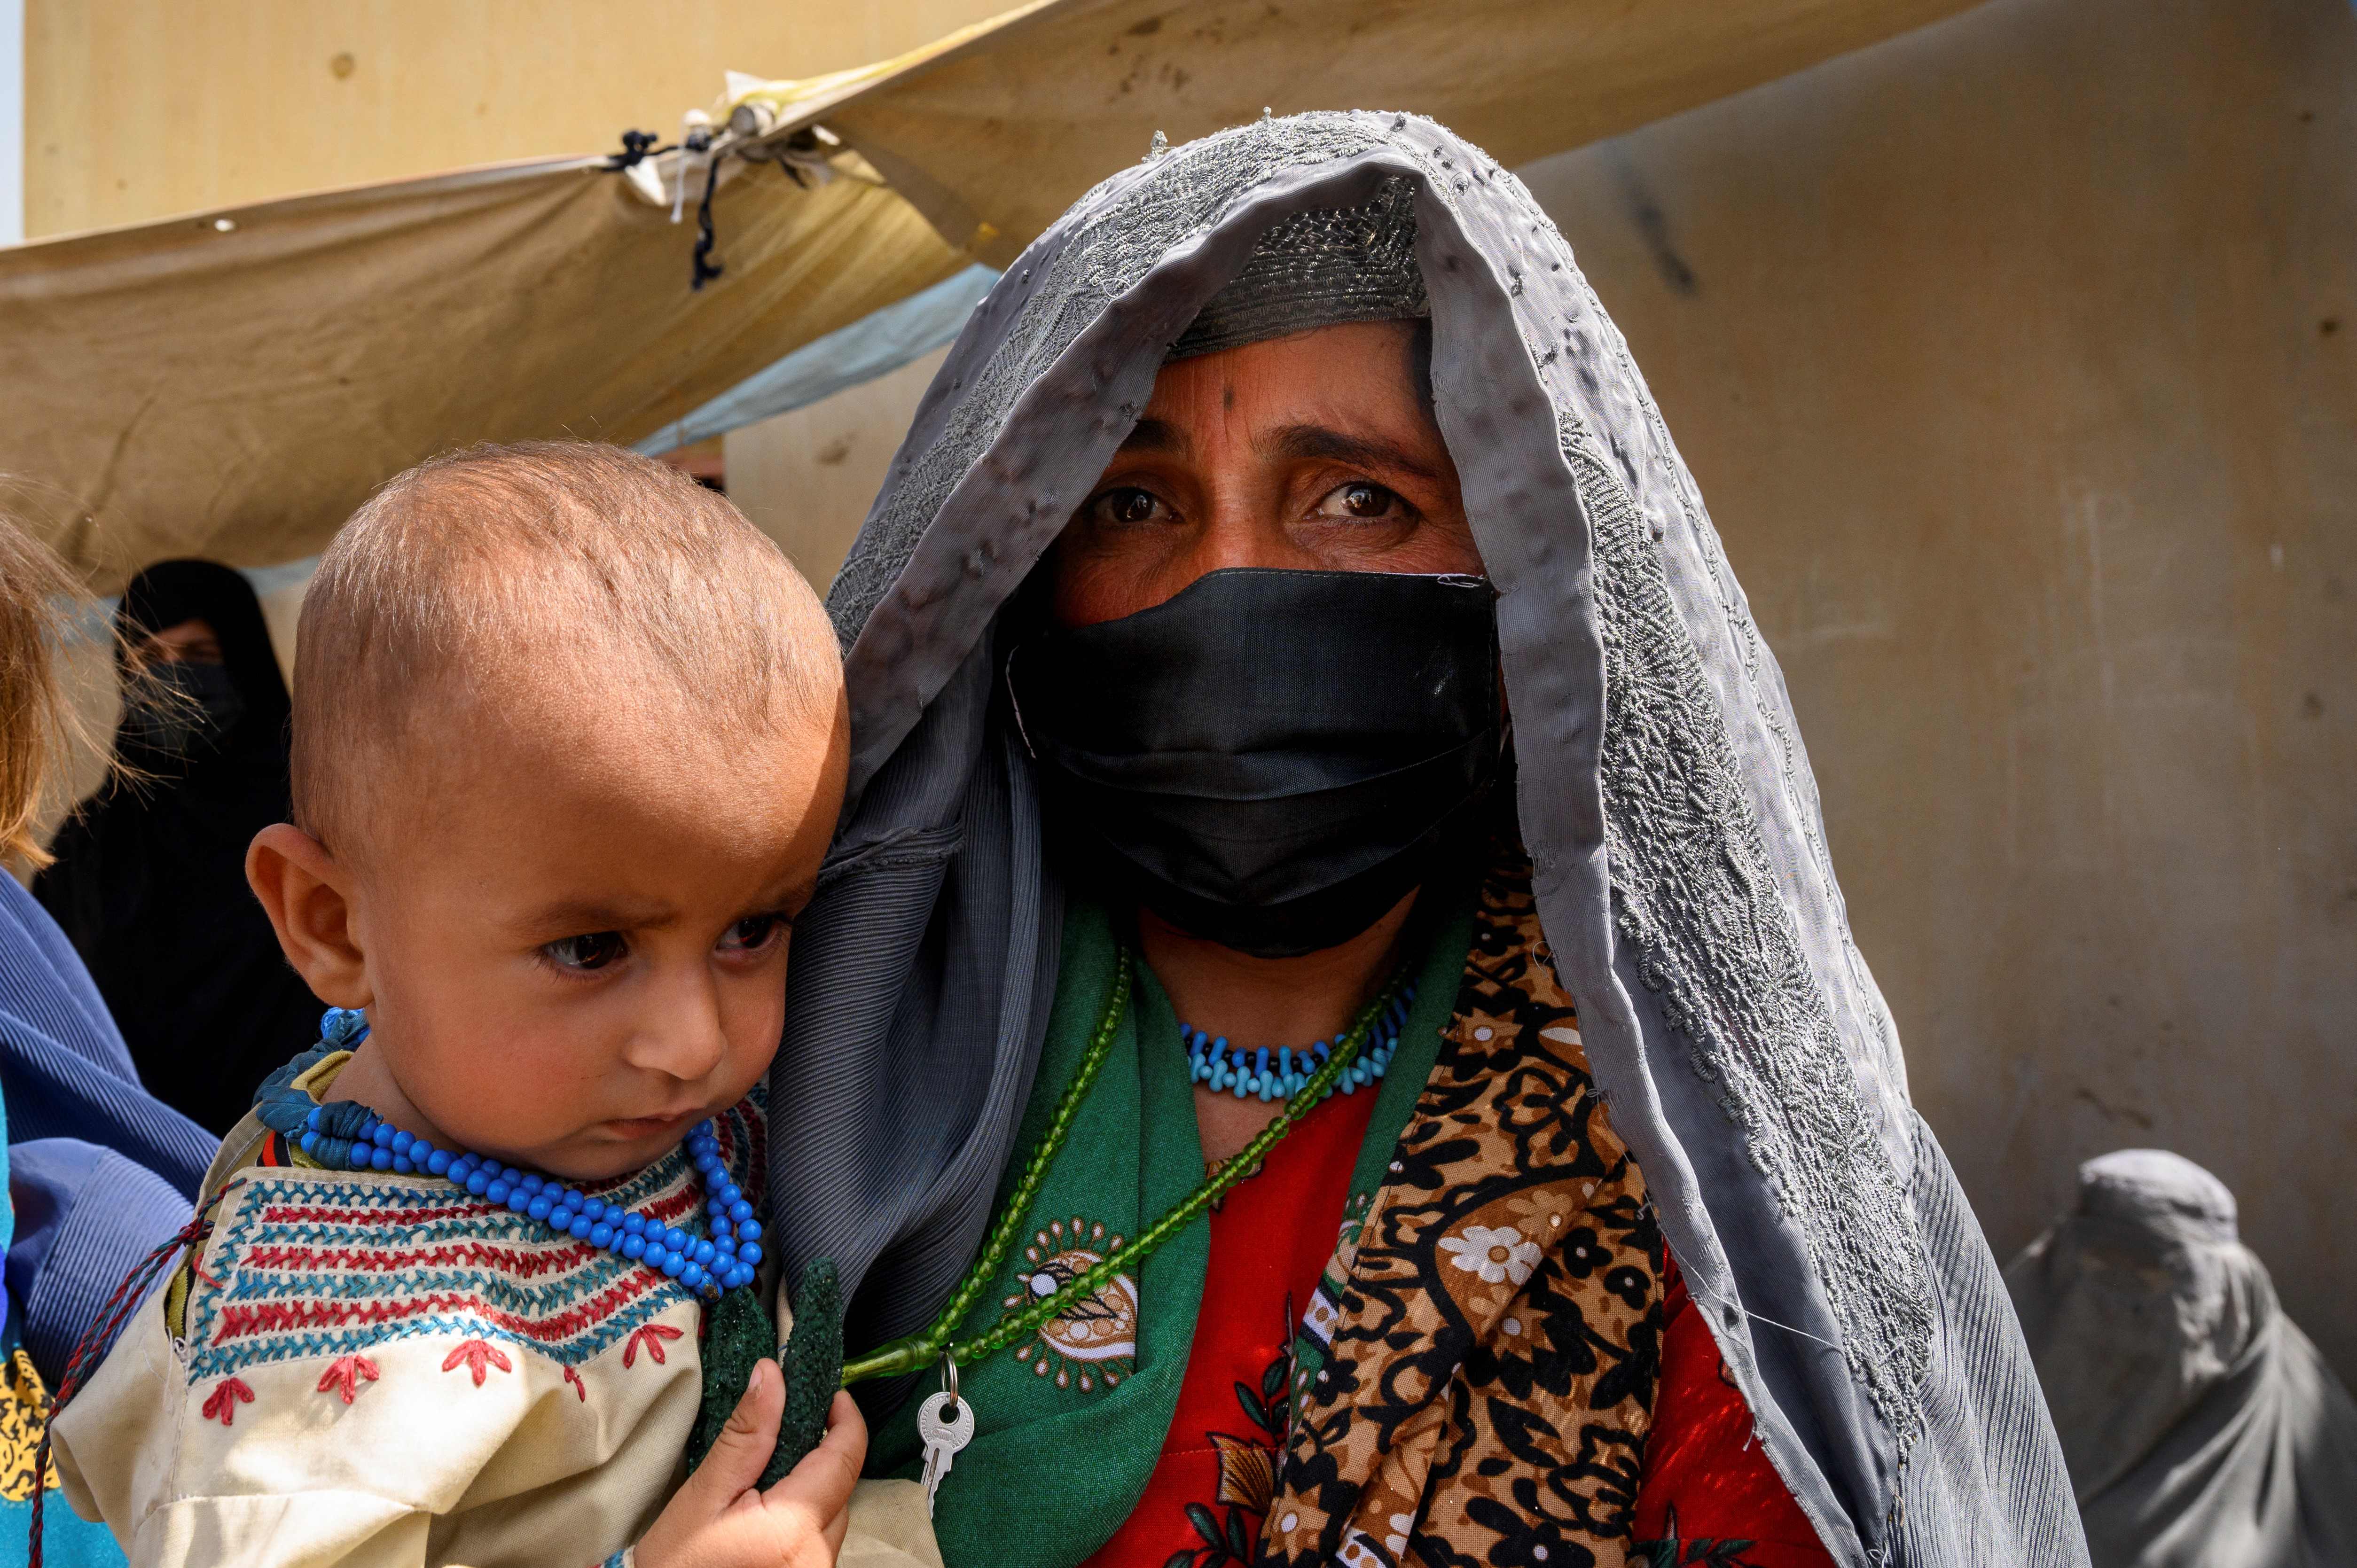 Civilians have no choice but to flee Helmand province and its capital city Lashkar Gah